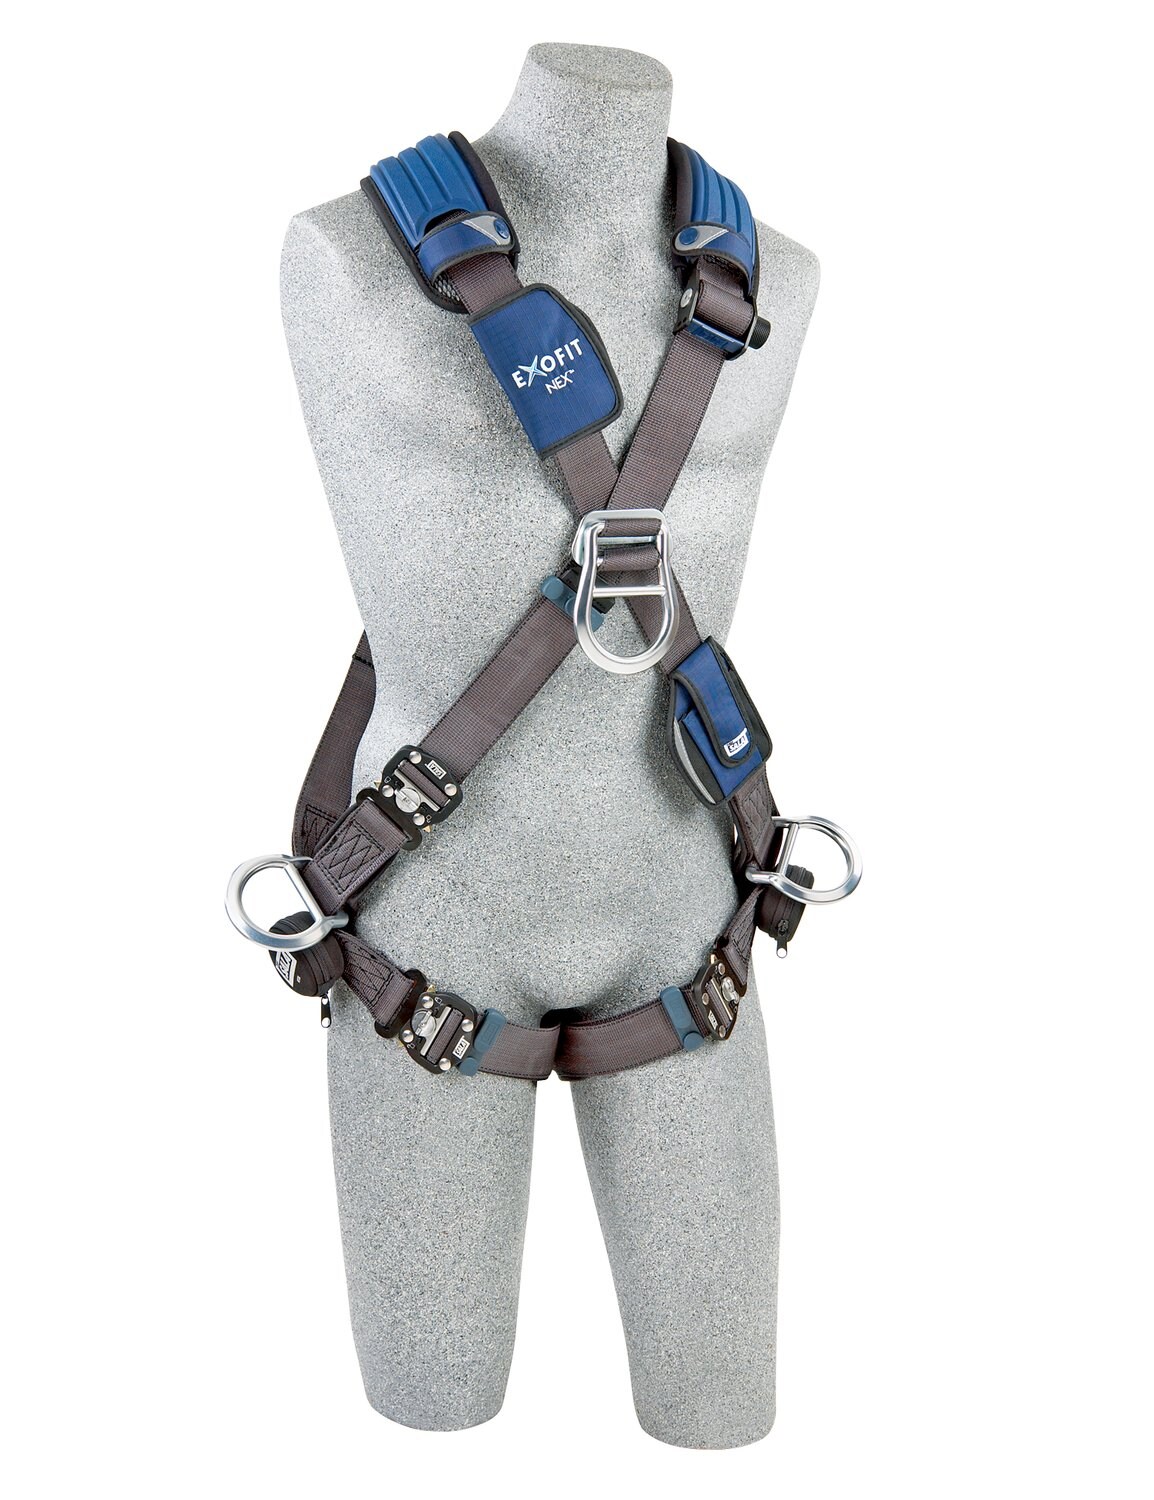 7012816195 - 3M DBI-SALA ExoFit NEX Comfort Cross-Over Climbing/Positioning Safety Harness 1113109, Medium